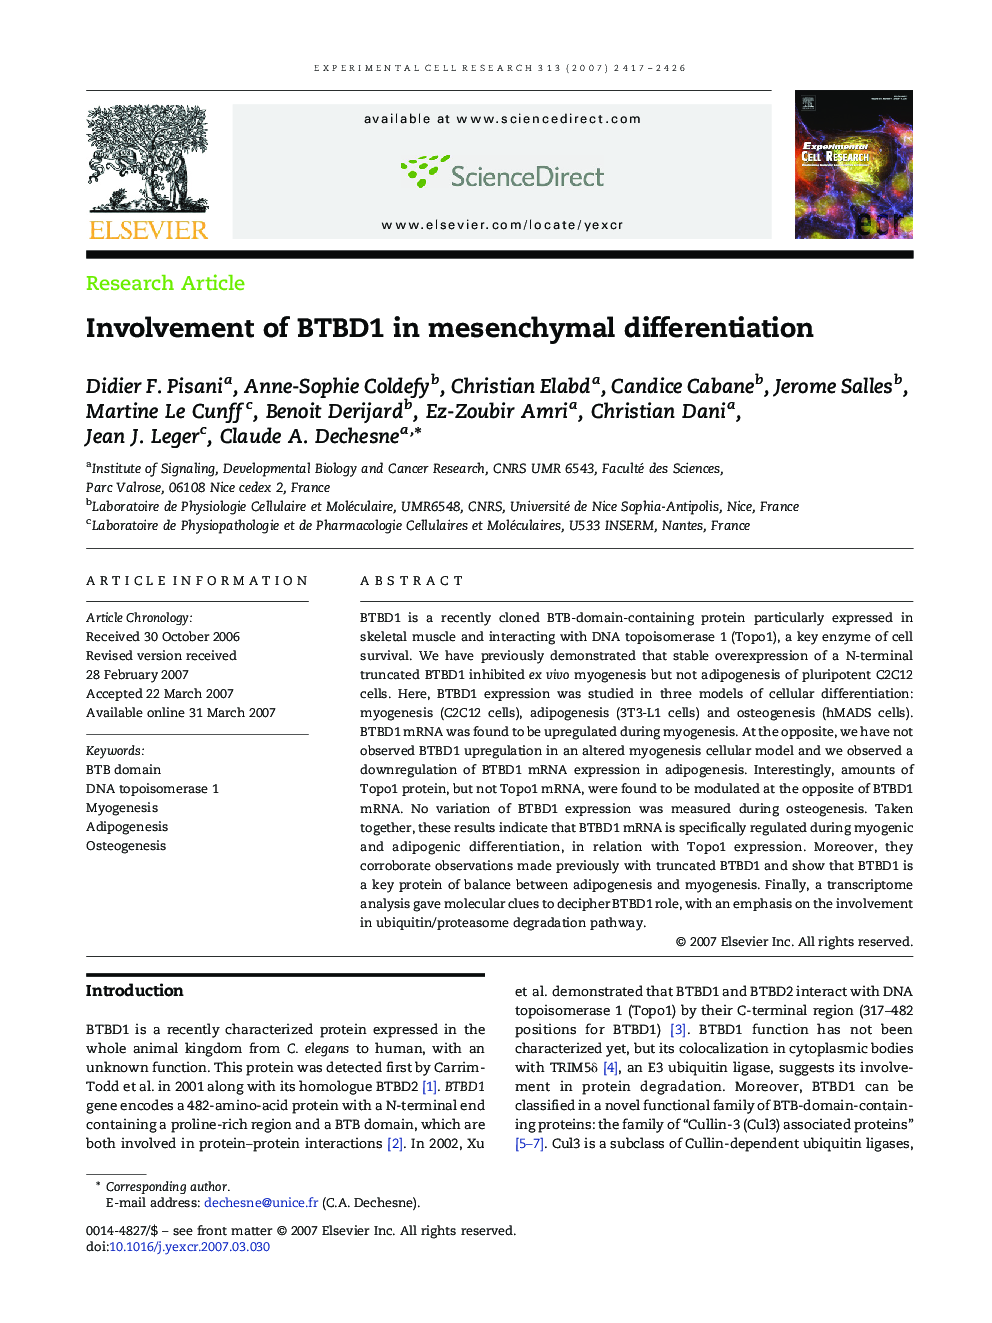 Involvement of BTBD1 in mesenchymal differentiation